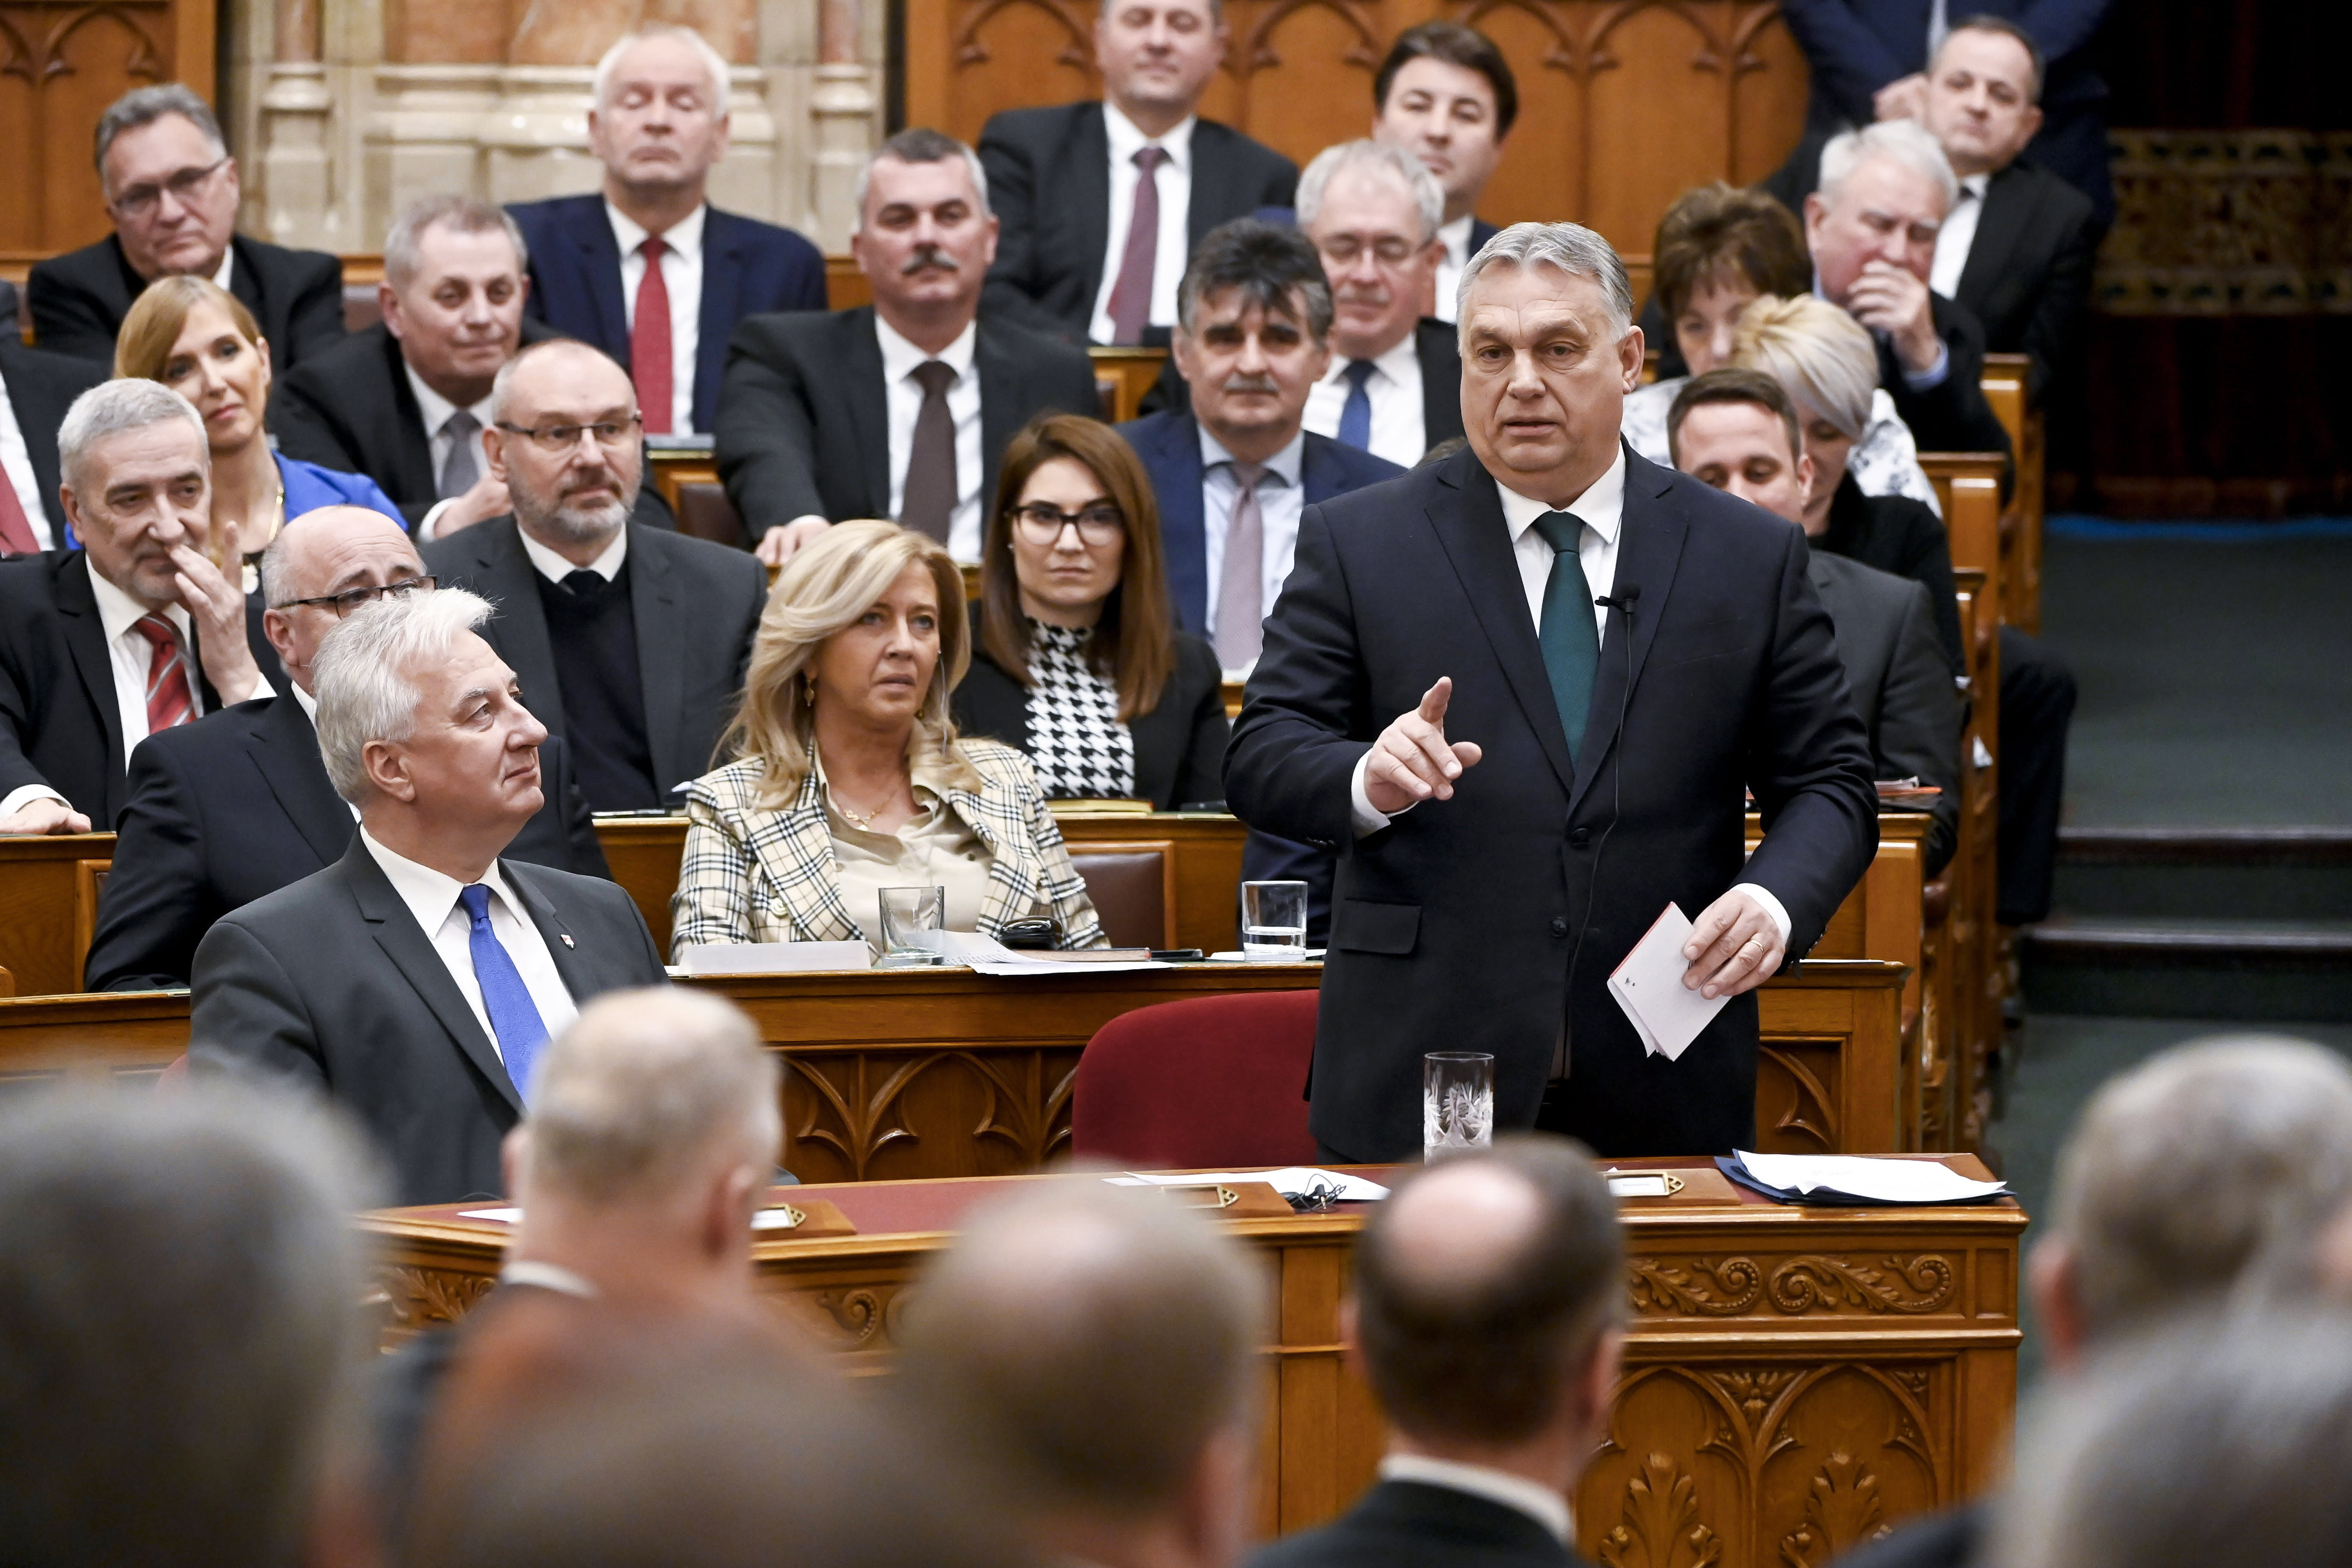 Fidesz: Hungary menerima permohonan NATO Finland pada 27 Mac